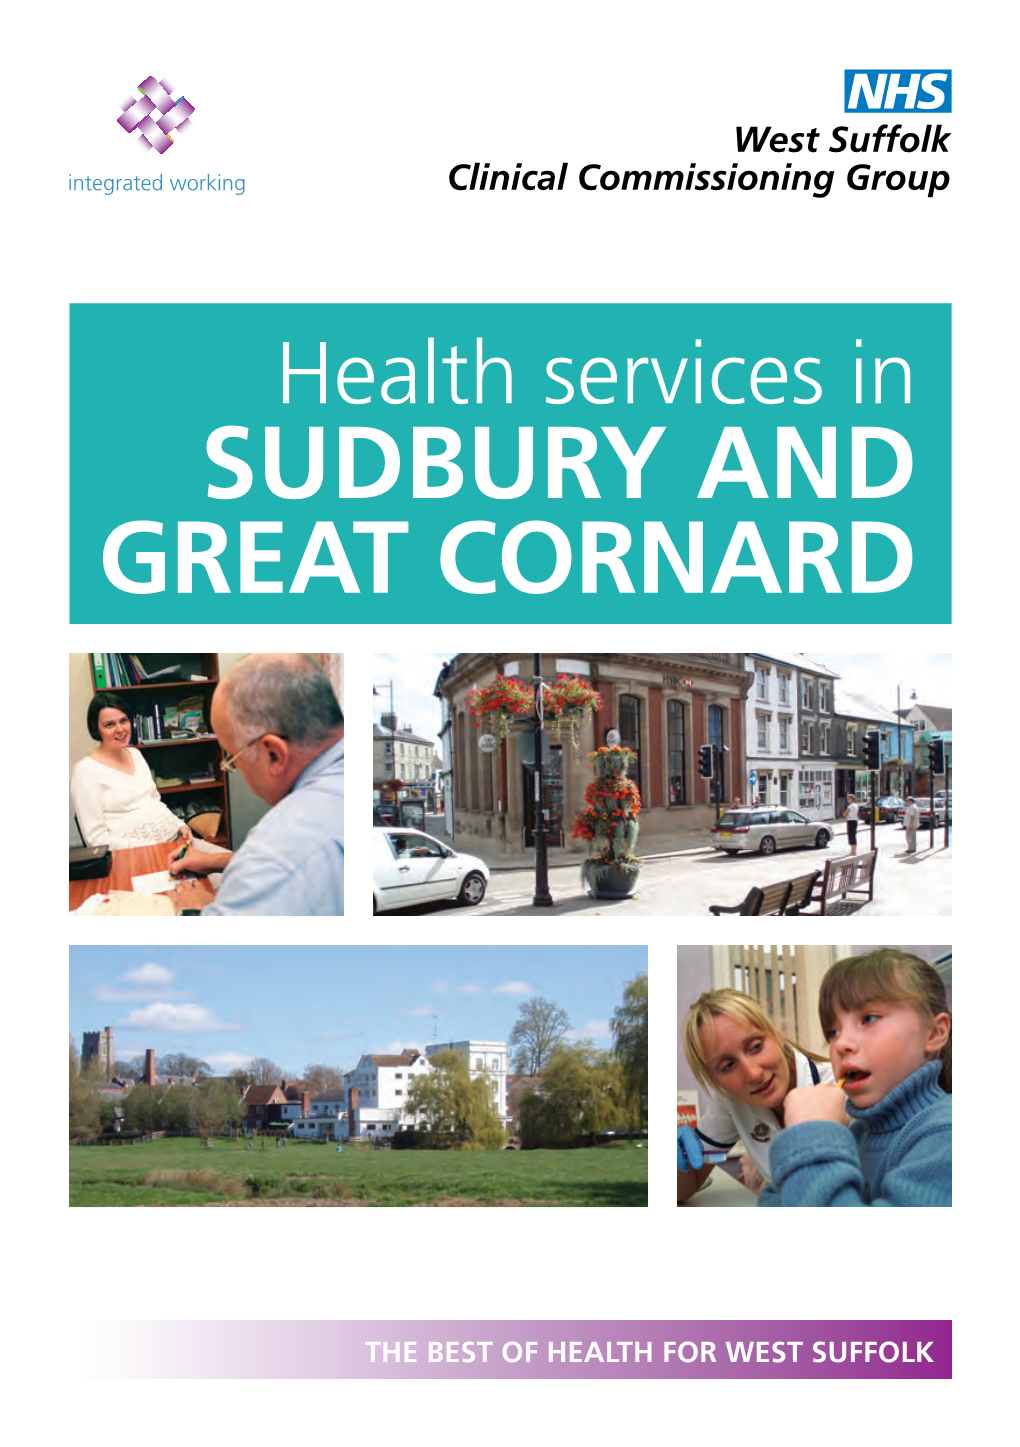 Sudbury and Great Cornard